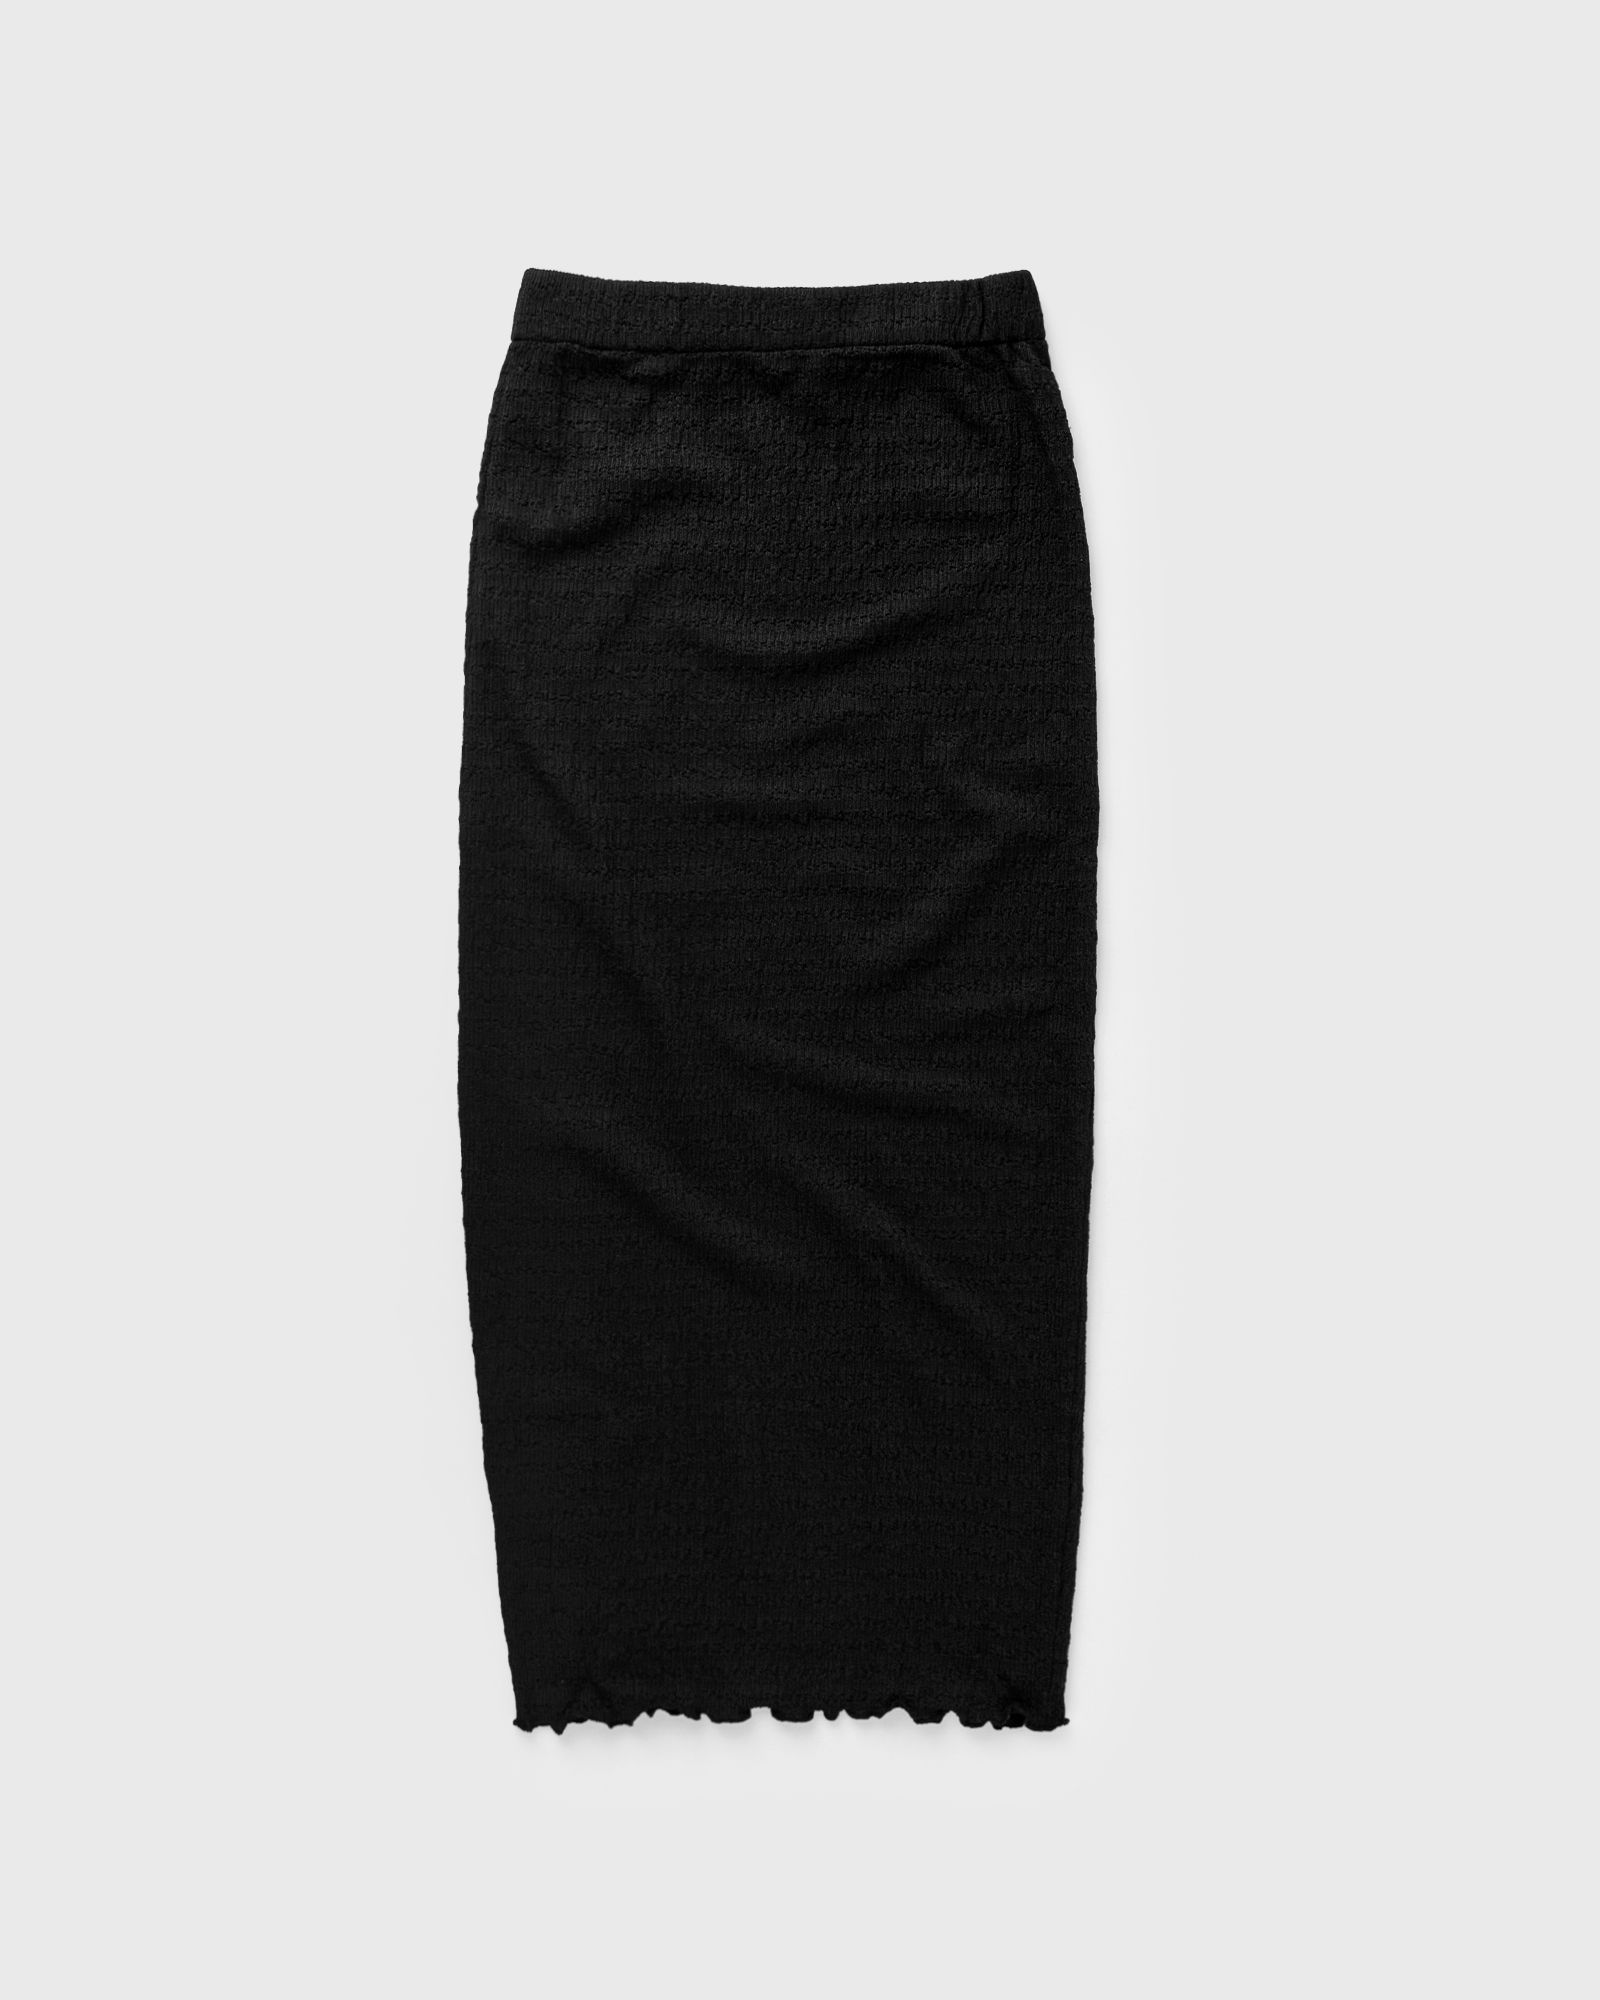 Envii - enwheel maxi skirt 7041 women skirts black in größe:l